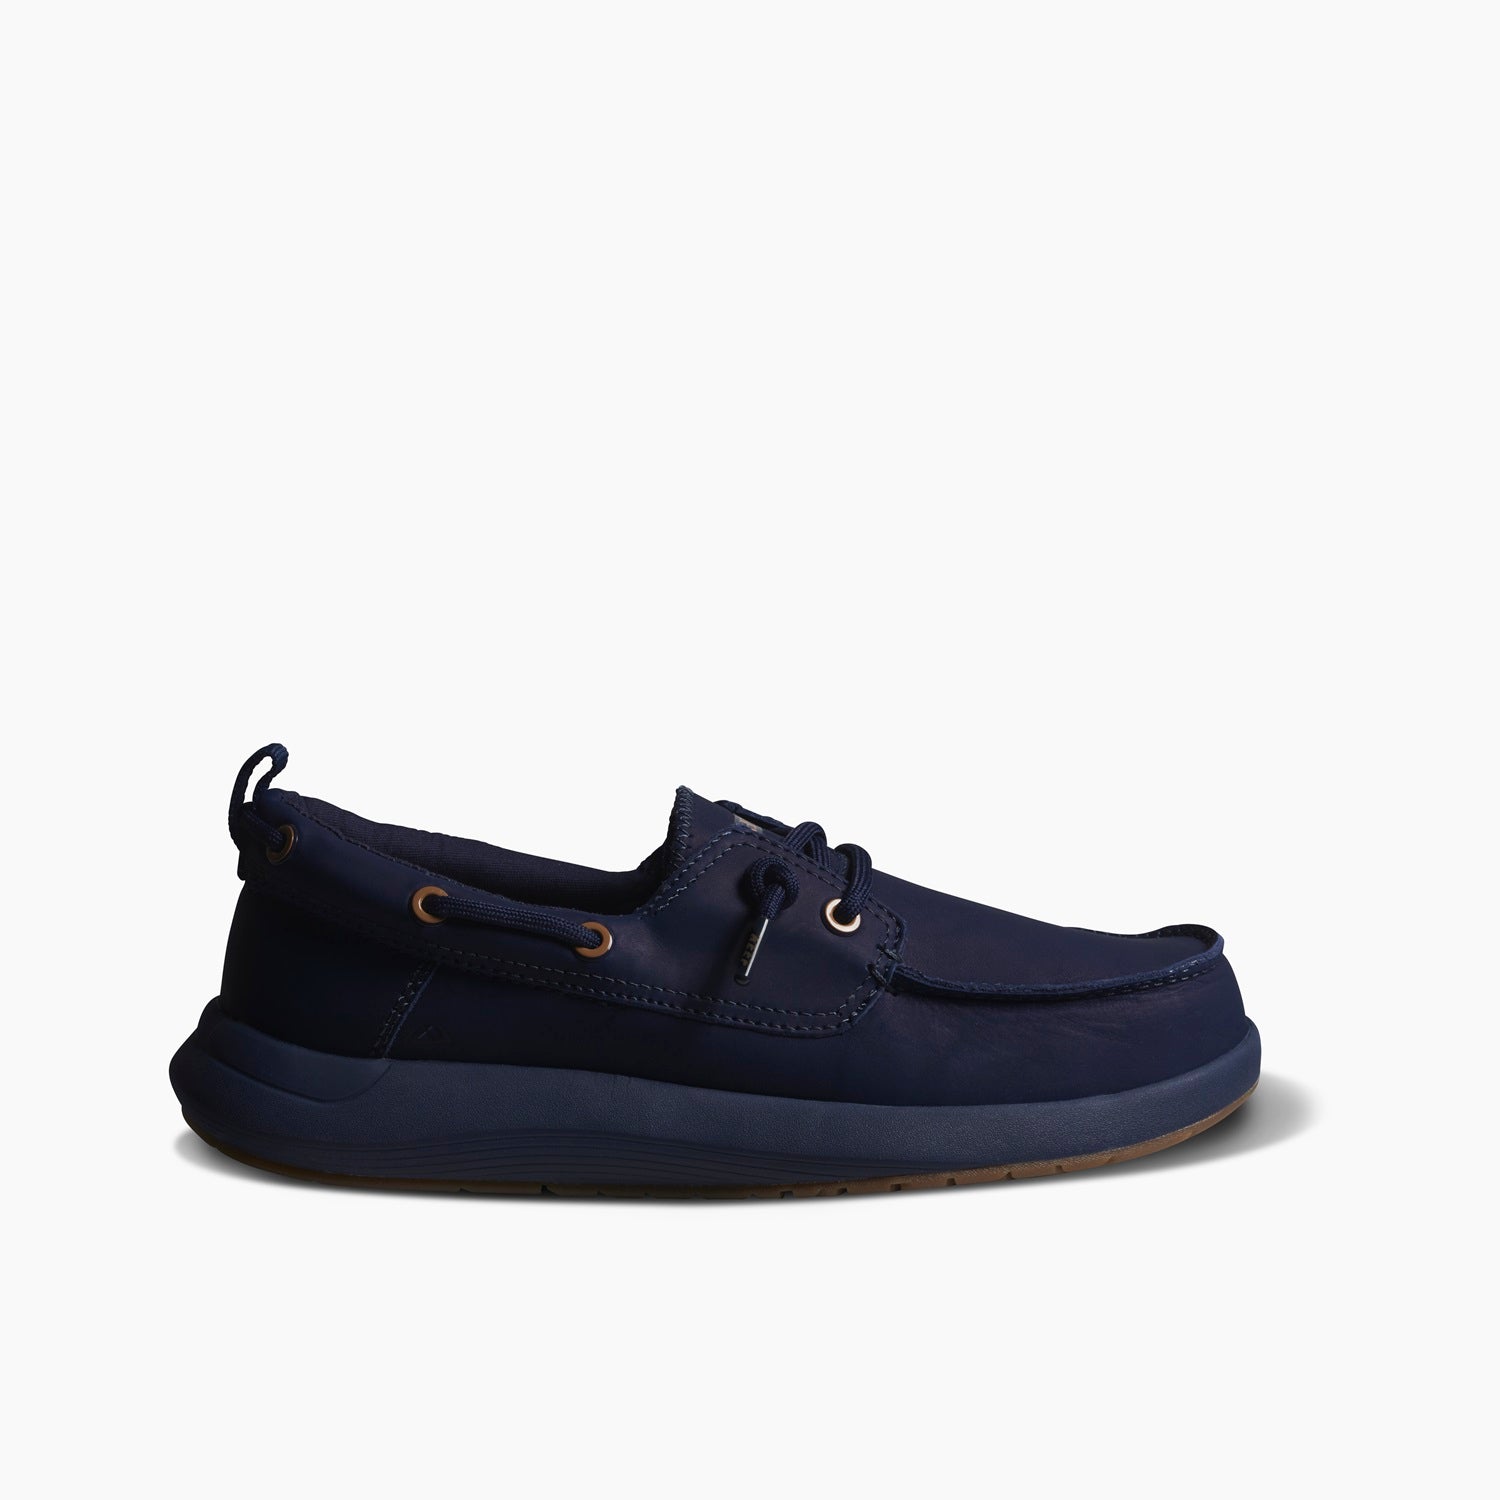 Men's SWELLsole Pier Leather Shoes in Navy/Gum | REEF®